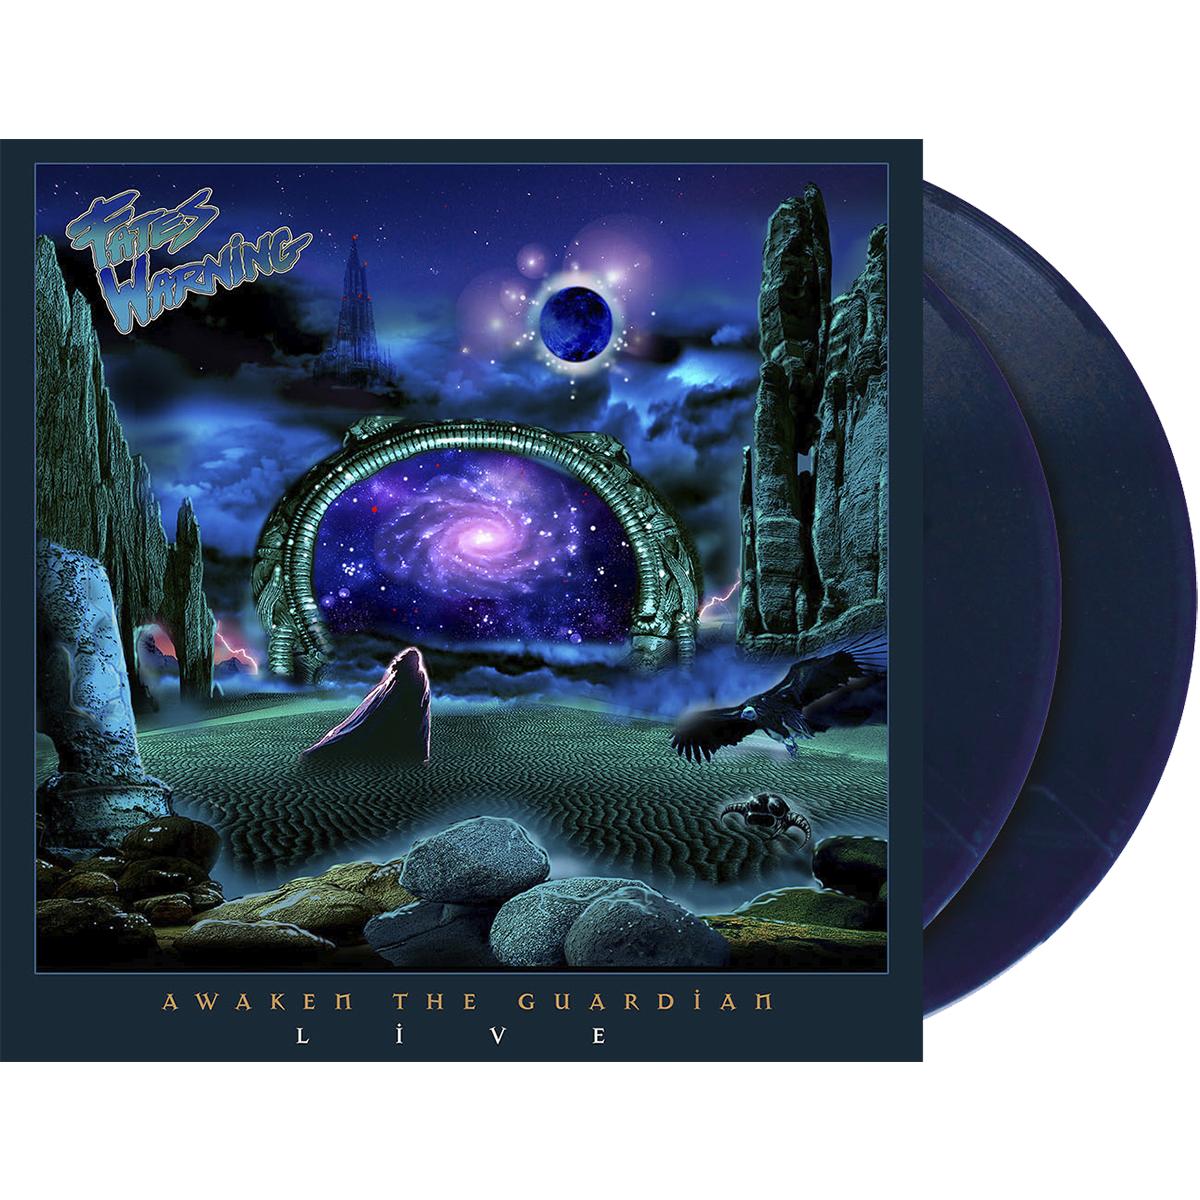 Fates Warning "Awaken The Guardian Live" Gatefold 2x12" 180g Black Vinyl